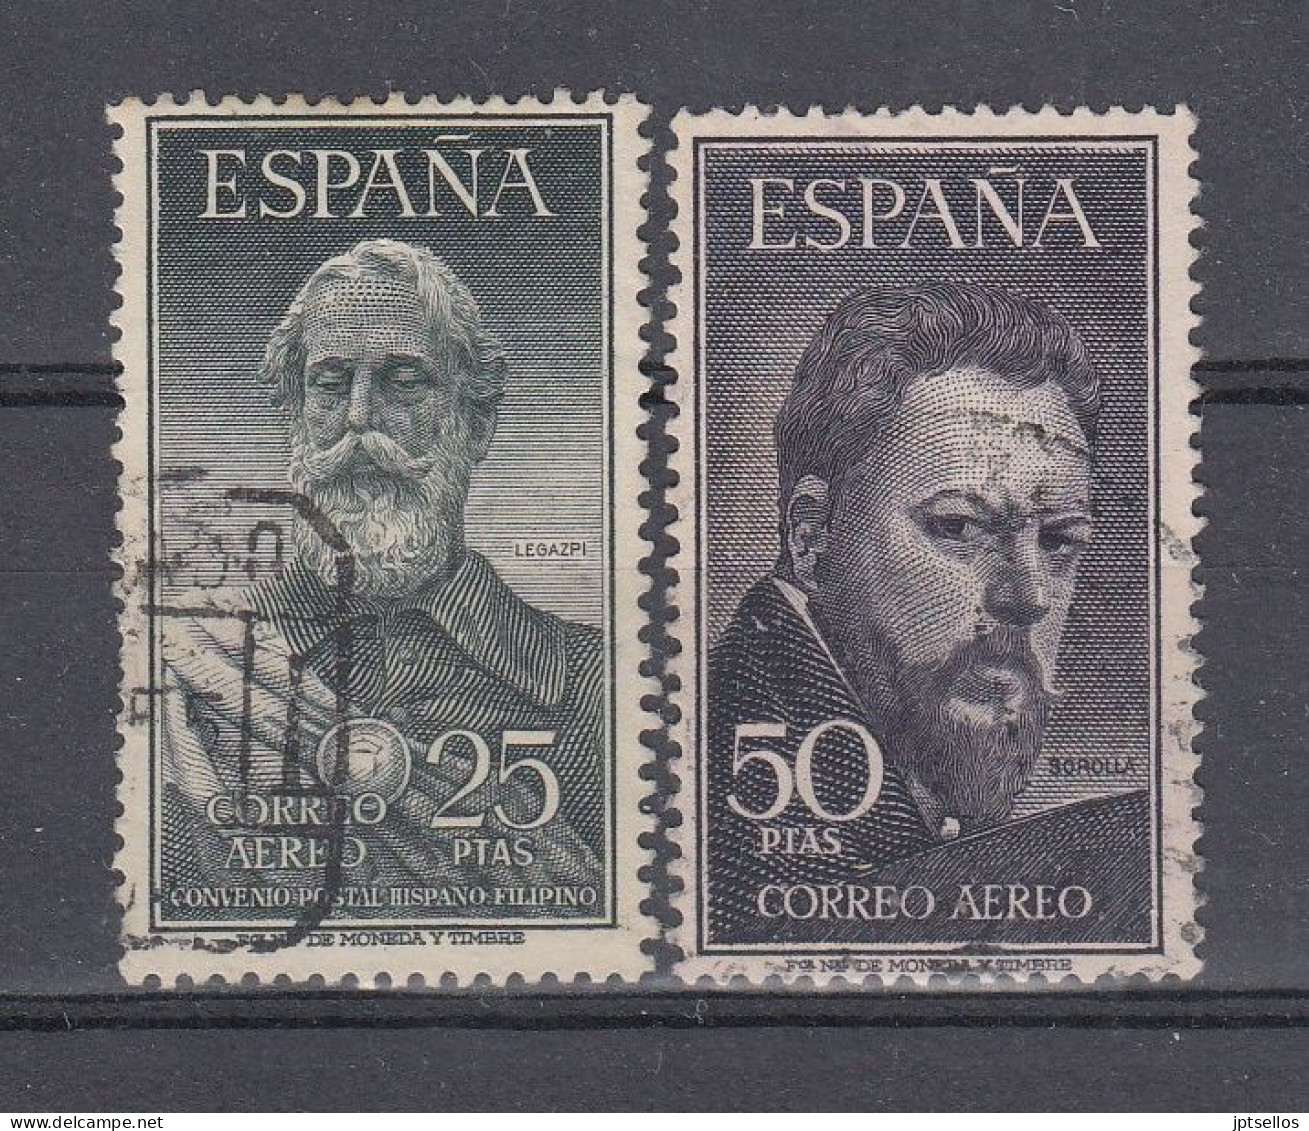 ESPAÑA  1953 Nº EDIFIL 1124/1125,YV. A-262/A-263 LEGAZPI Y SOROLLA SERIE USADO (REF. 02) - Used Stamps